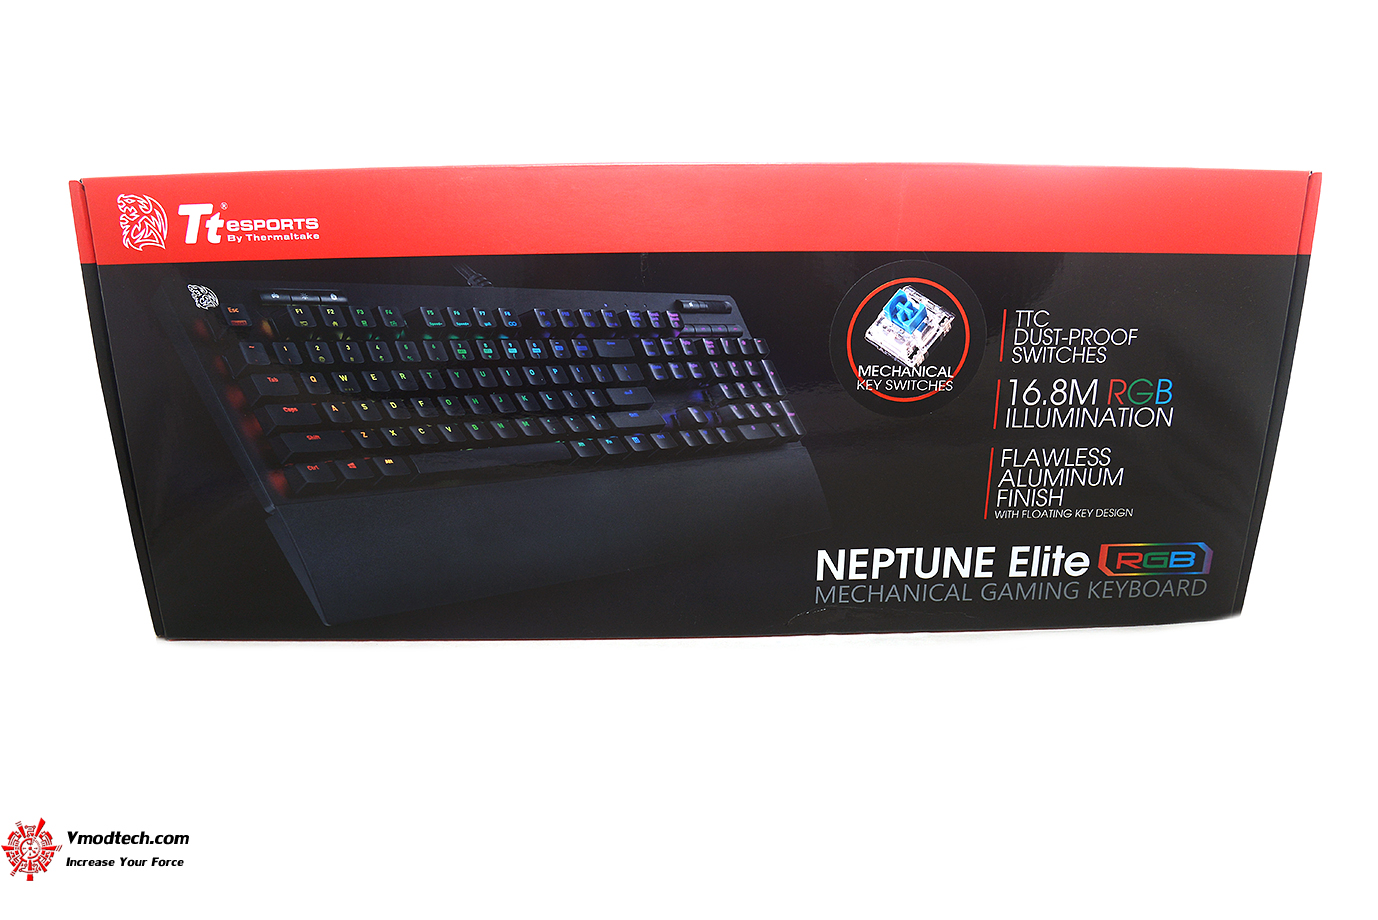 dsc 6795 Tt eSPORTS Neptune Elite RGB Blue Gaming Keyboard Review